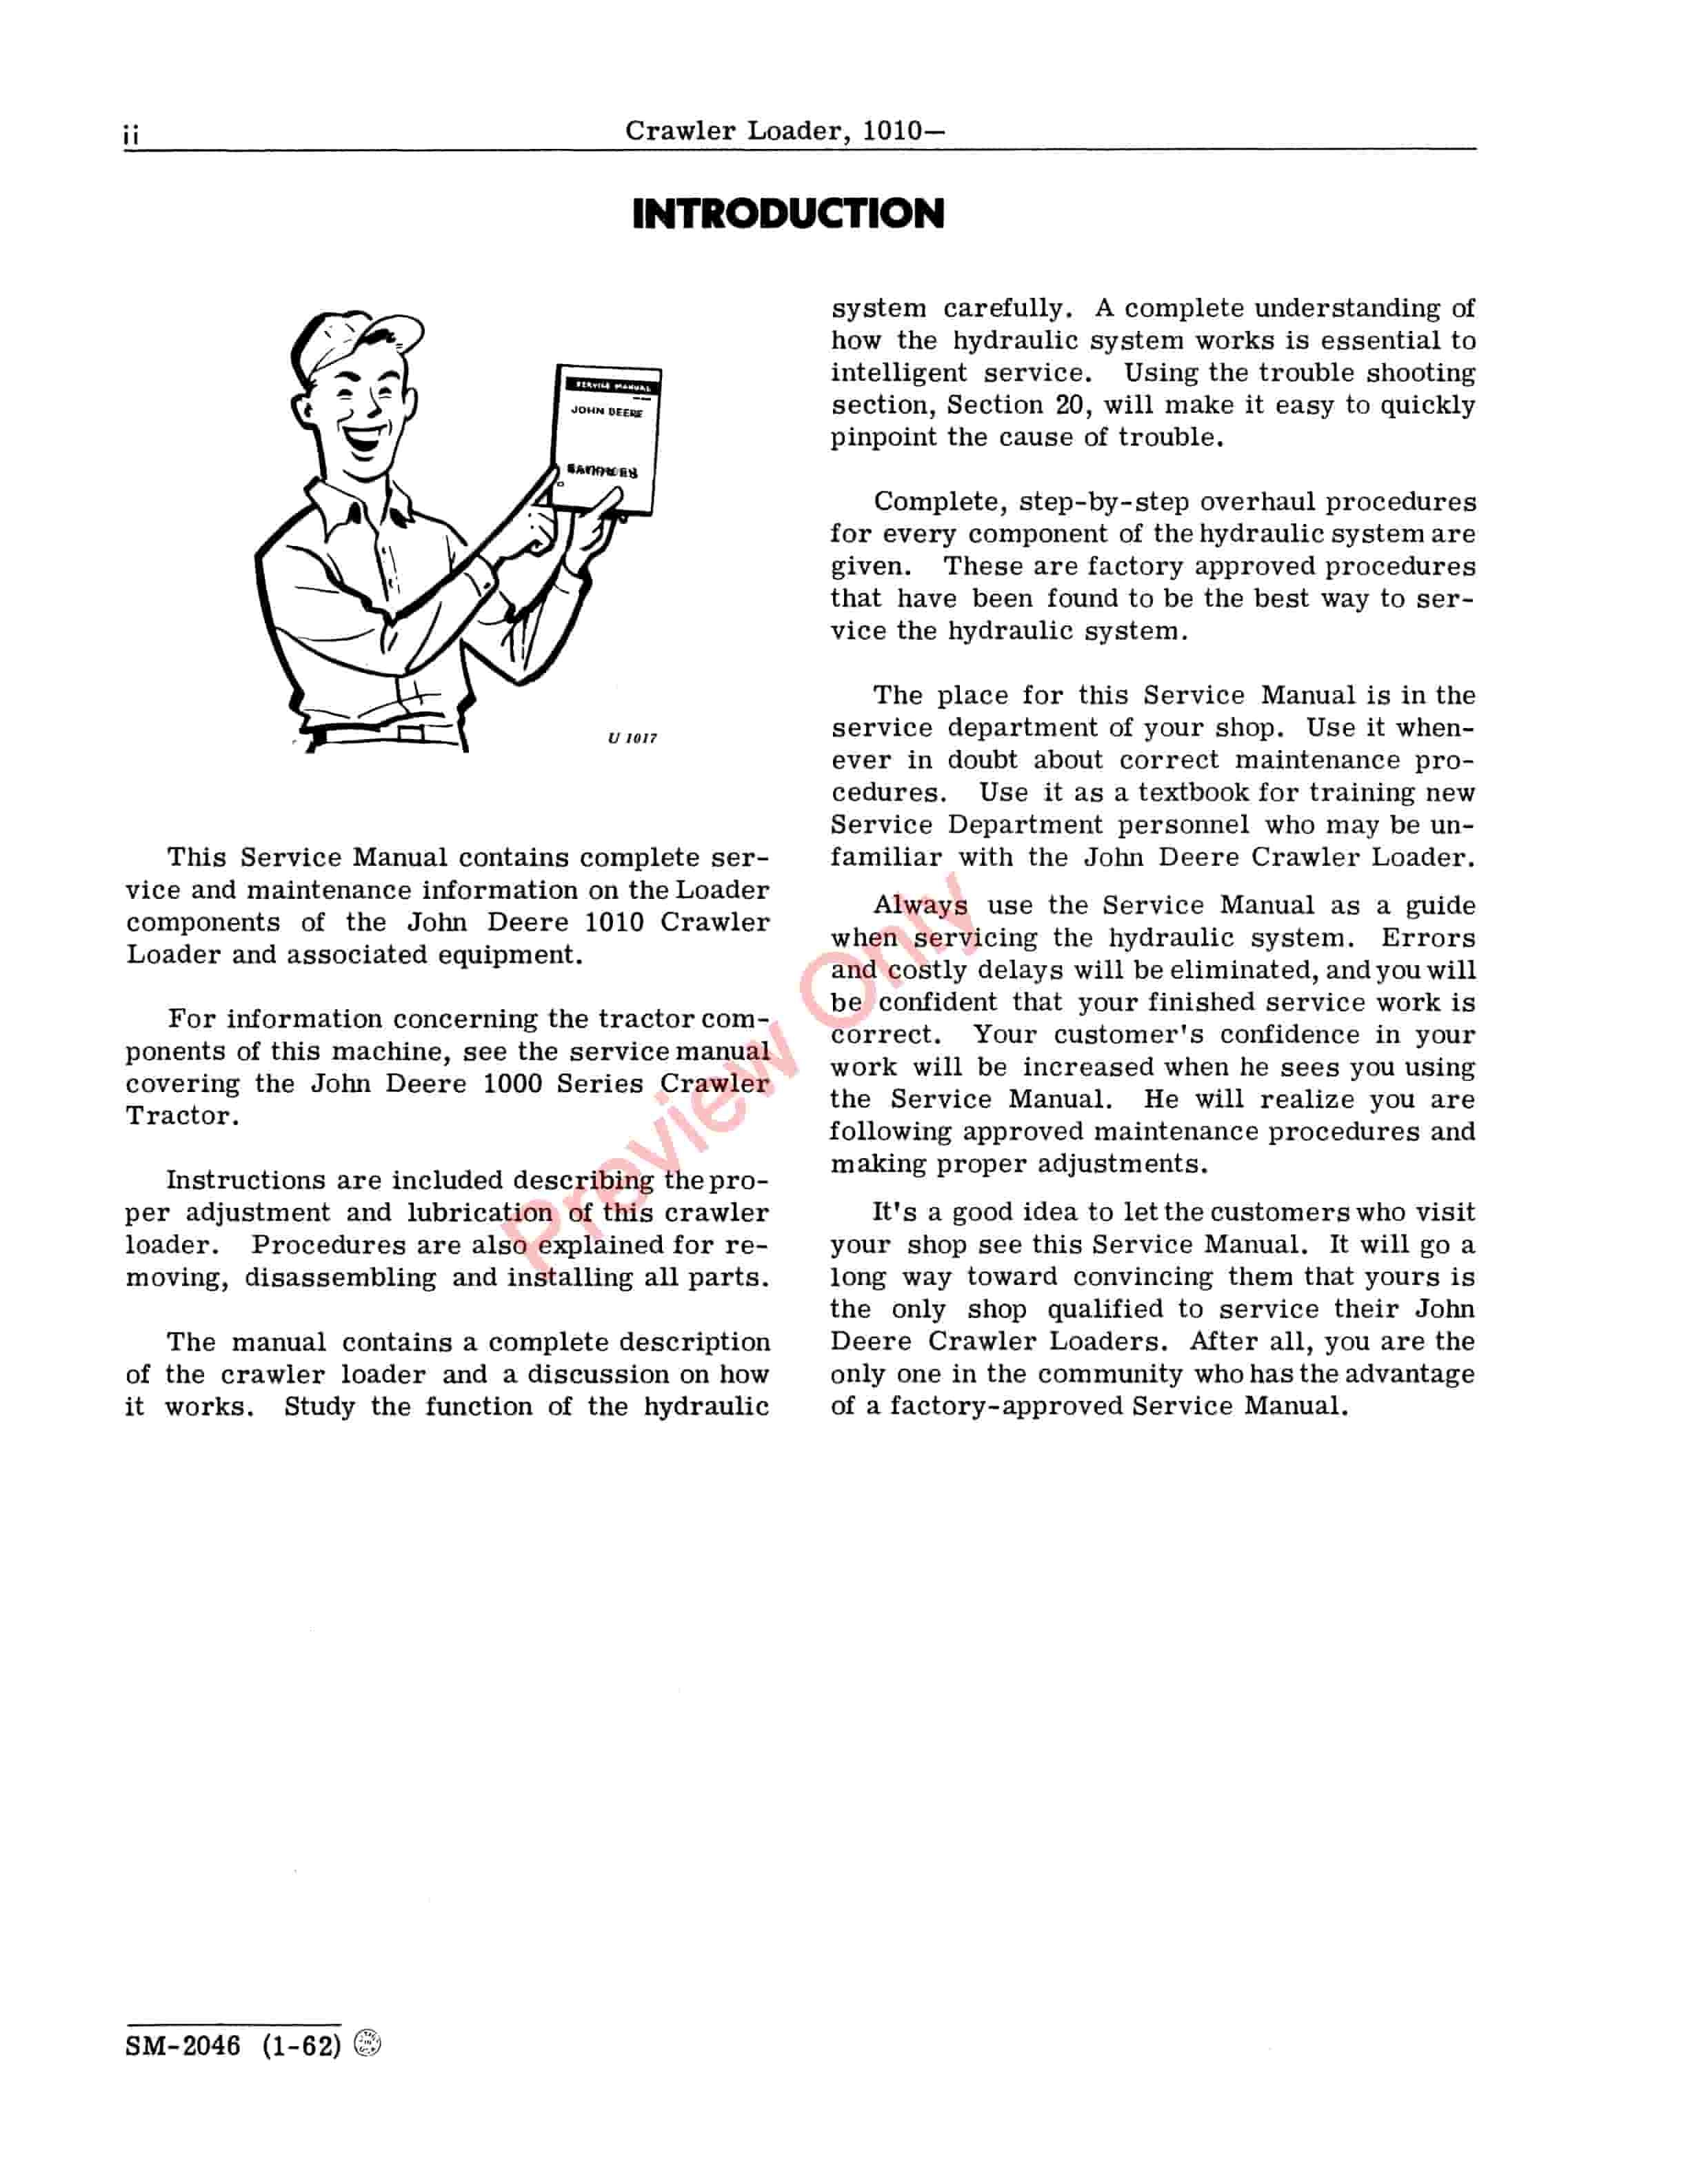 John Deere 1010 Crawler Loader Service Manual SM2046 01JAN62 4